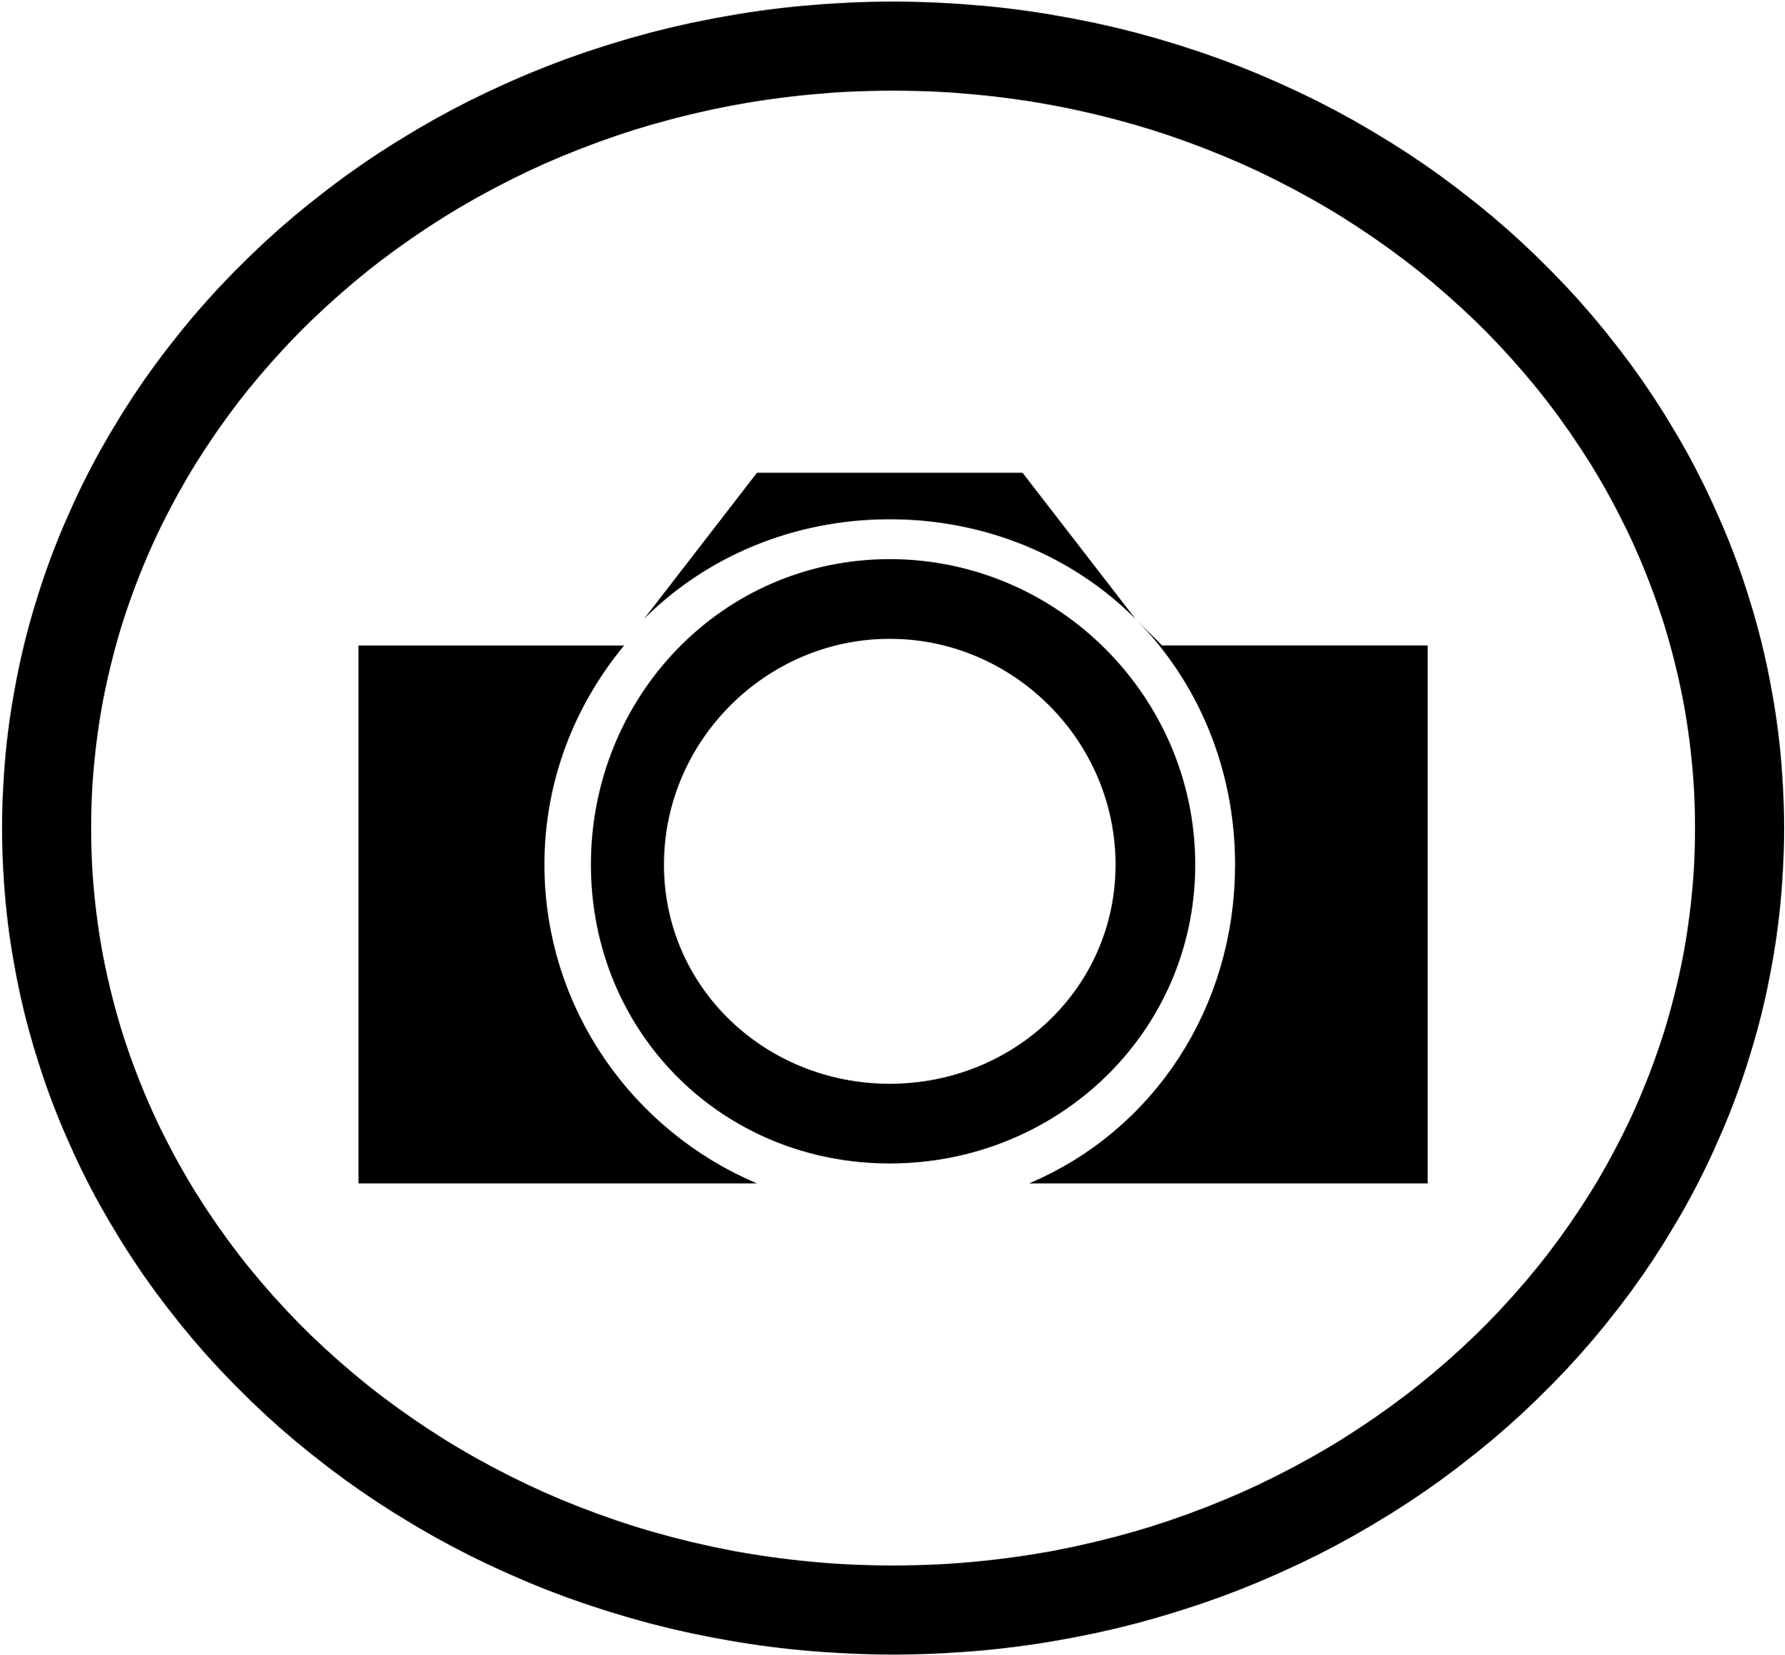 Minimalist Camera Logo Design PNG image